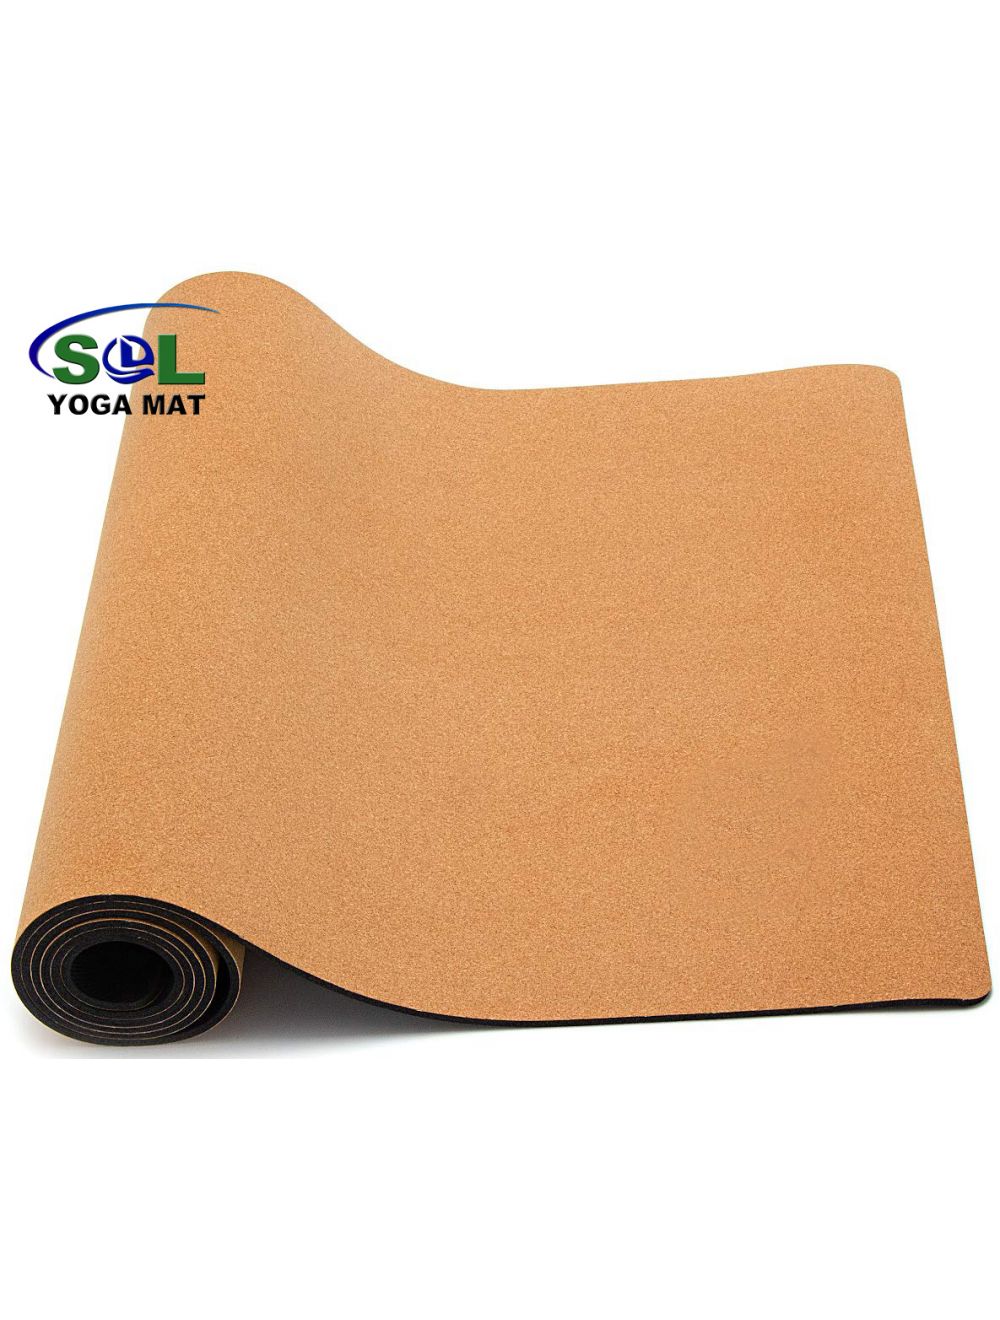 Eco-friendly Cork natural rubber Yoga mat